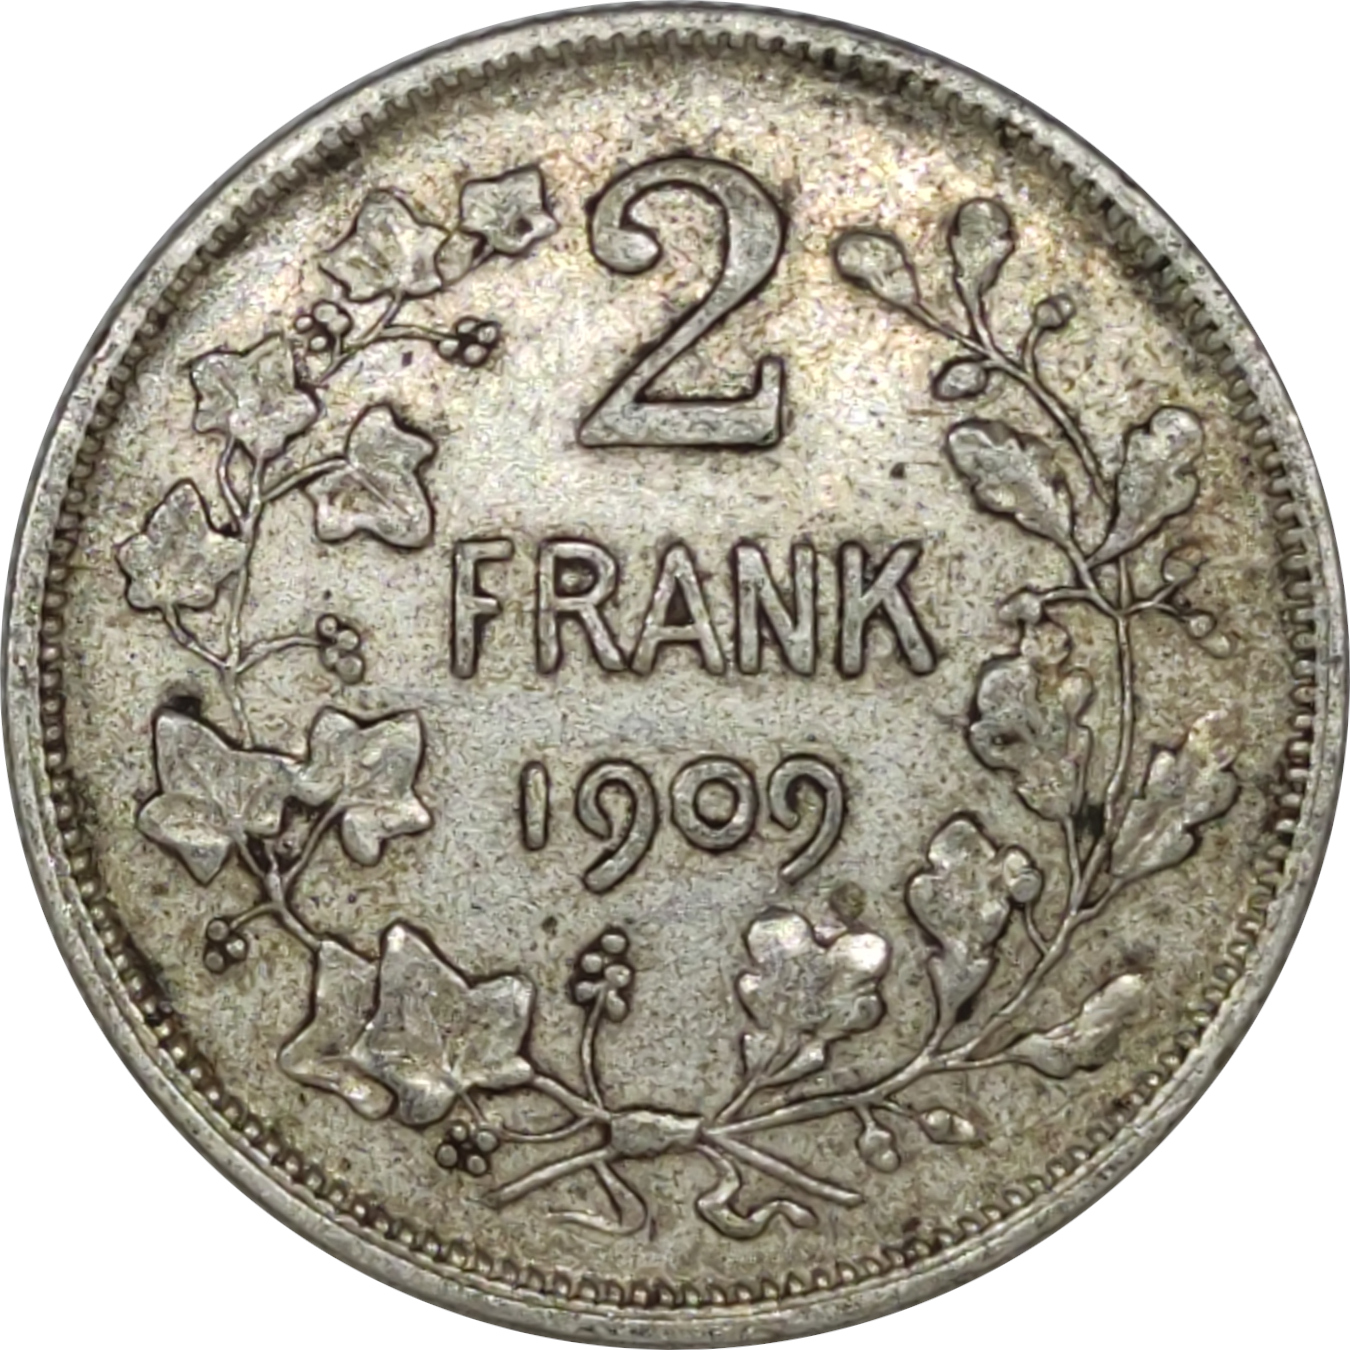 2 francs - Leopold II - Old head